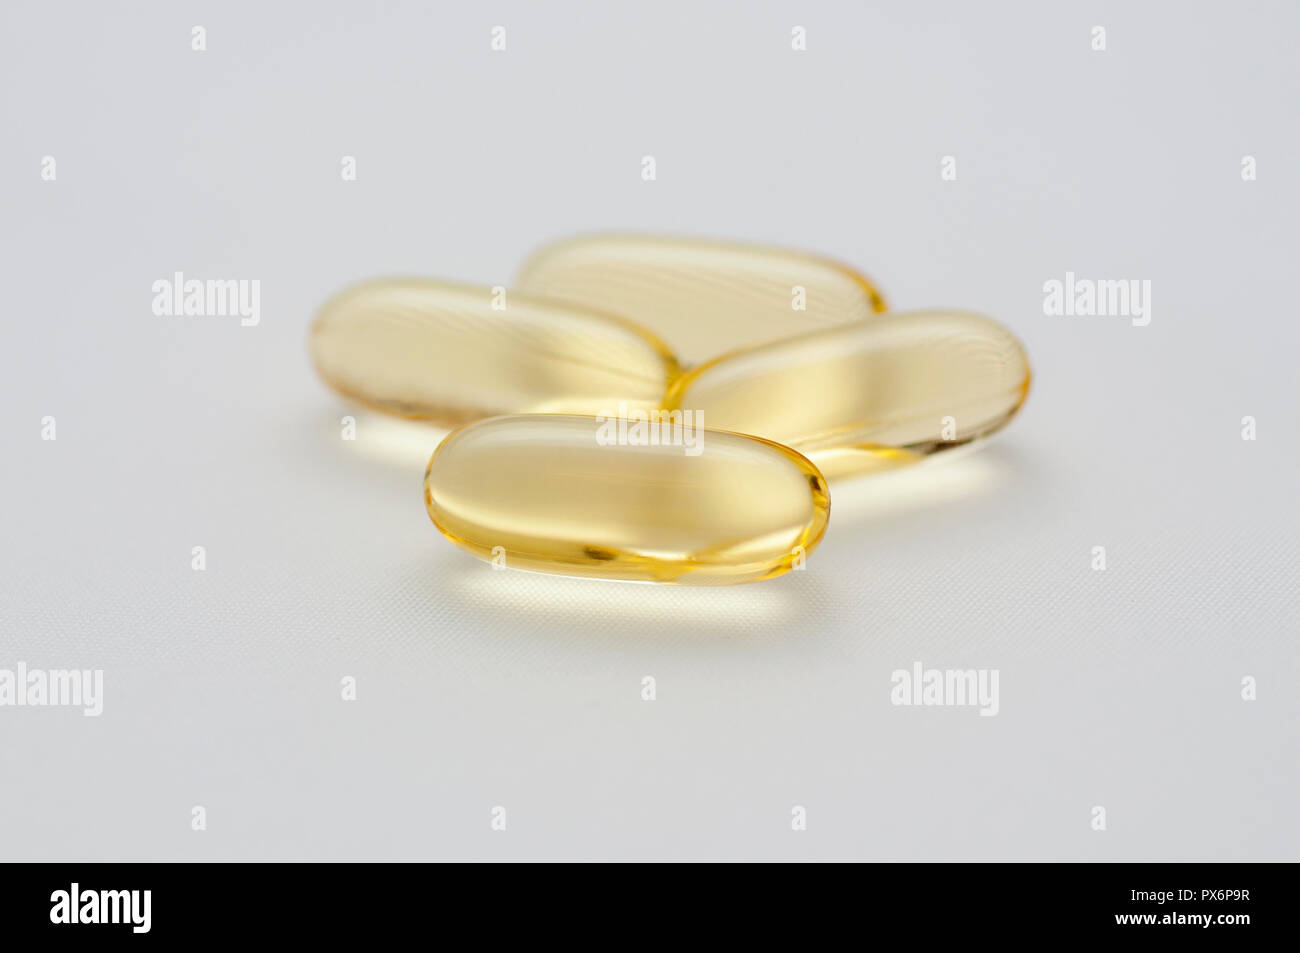 Four gelatine capsules of omega 3 fish oil on white background Stock Photo